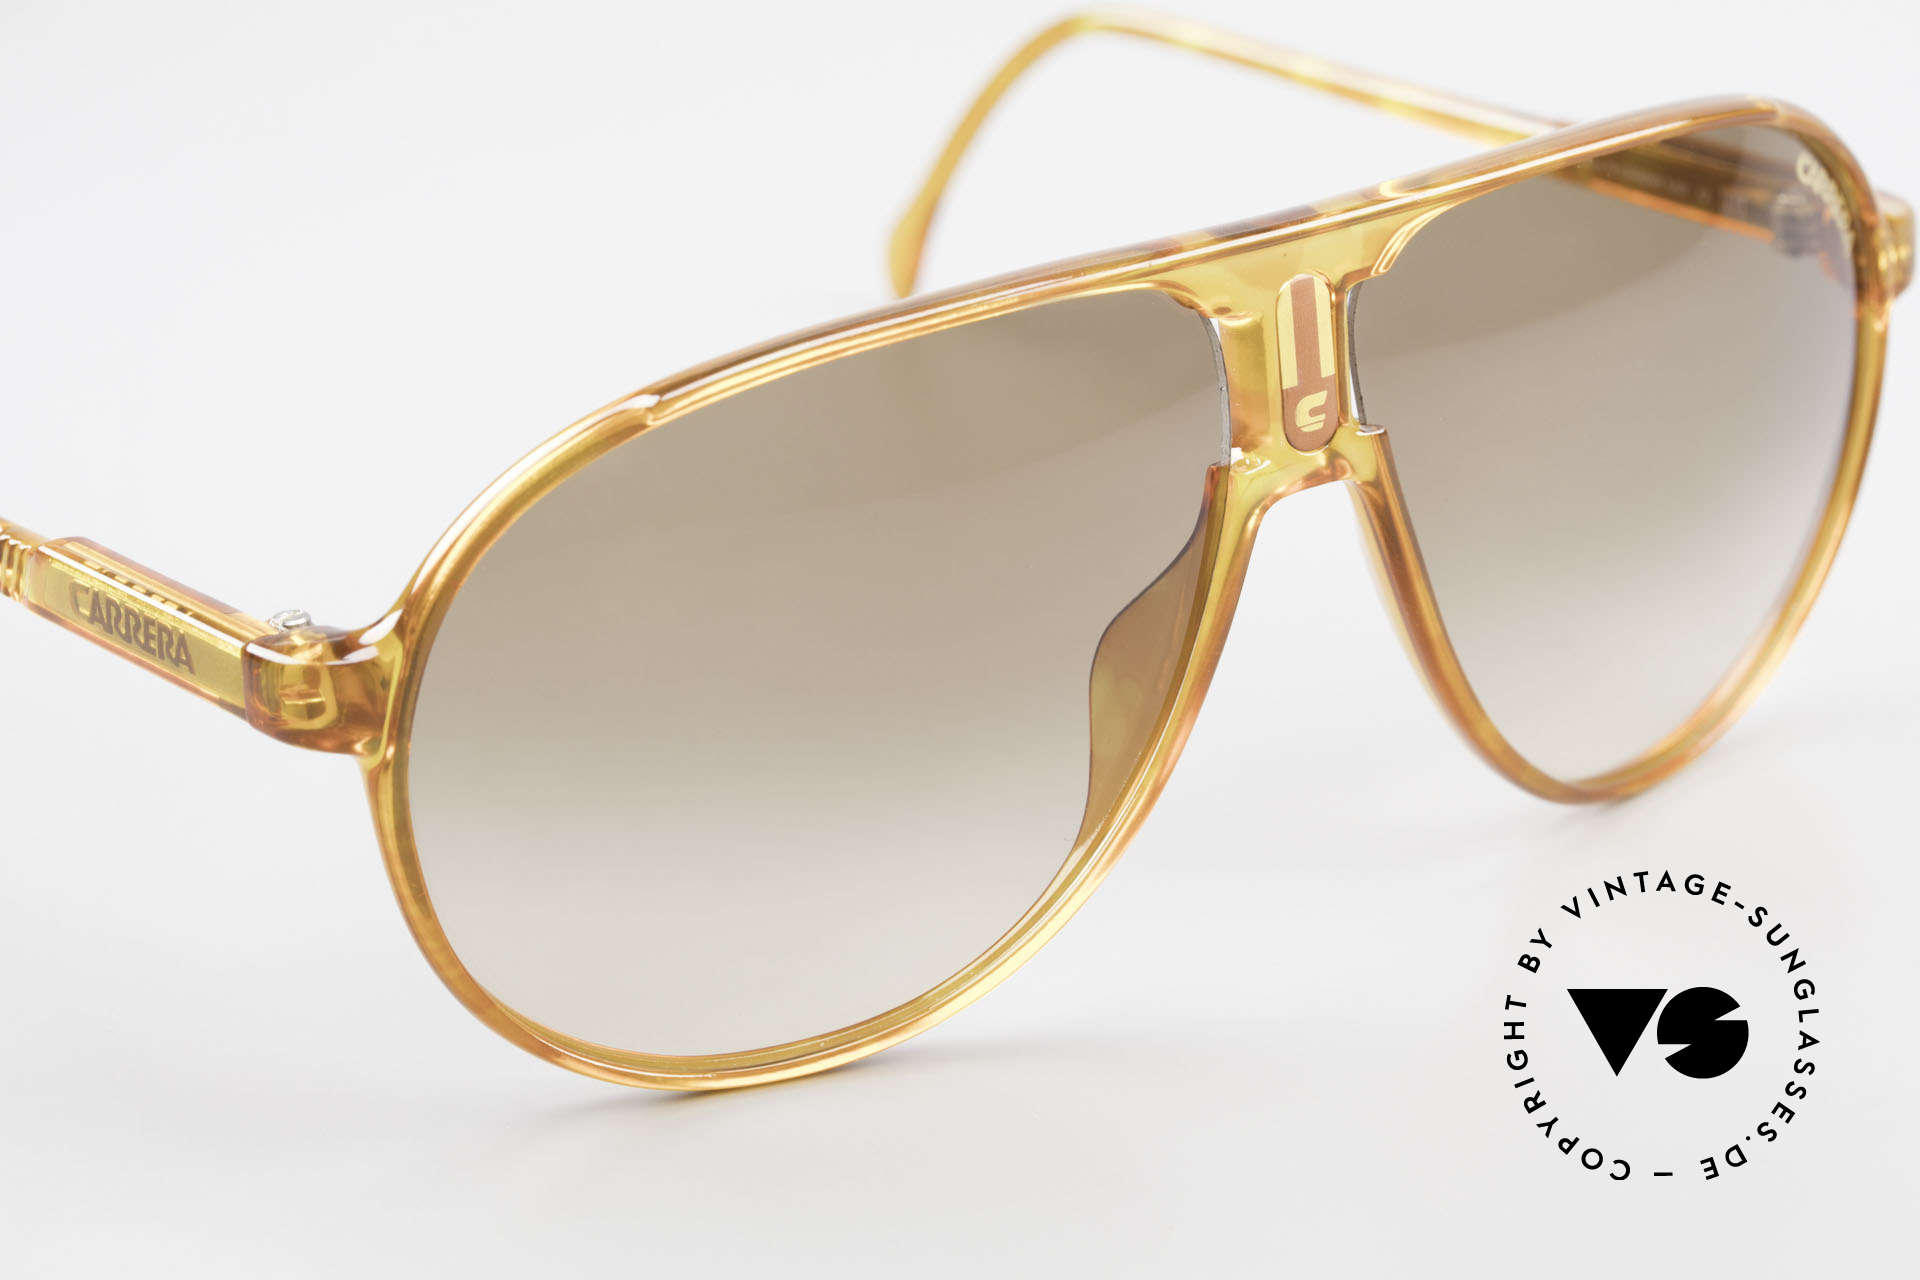 Carrera 5407 80's Sports Aviator Sunglasses, brown-gradient sun lenses for 100% UV protection, Made for Men